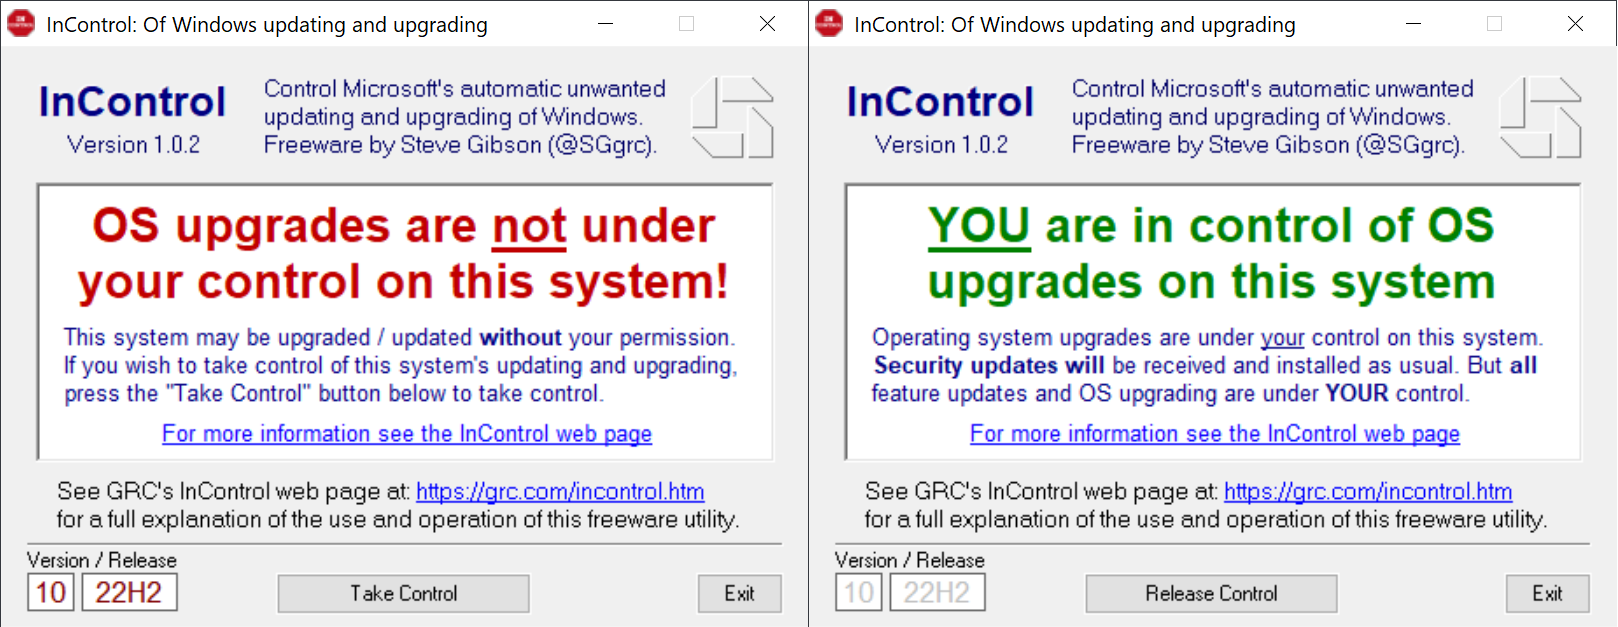 incontrol windows target release update